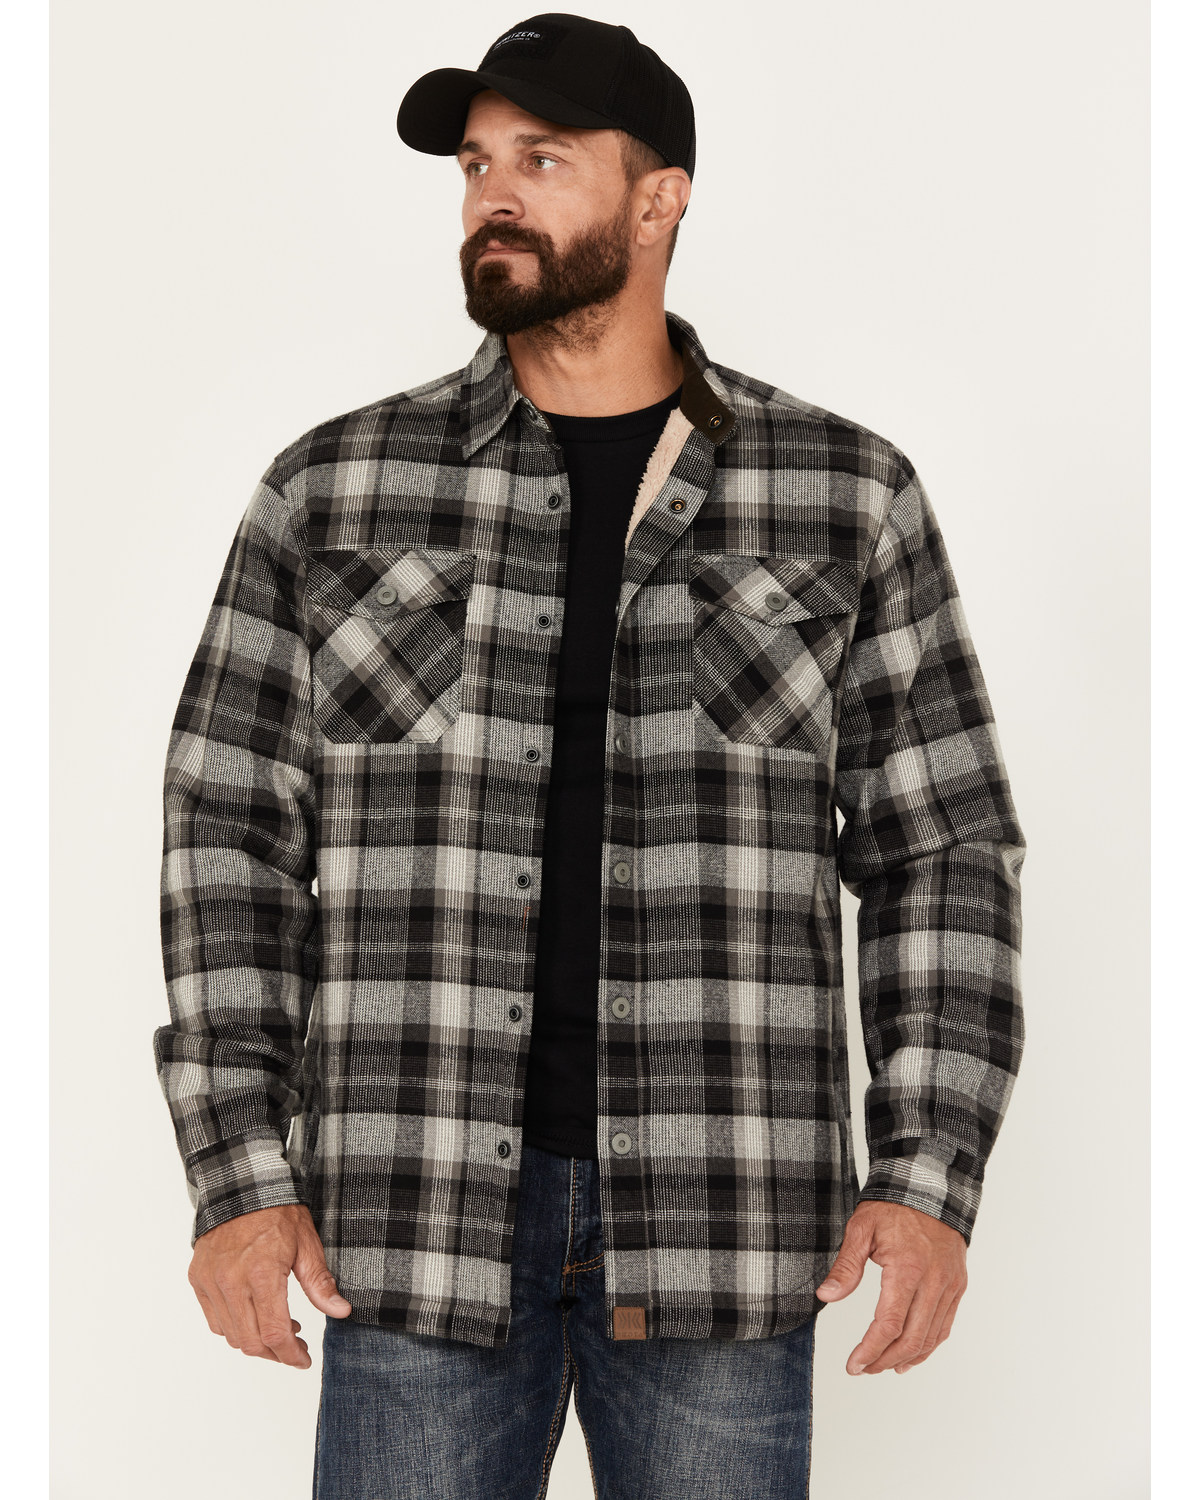 Dakota Grizzly Men's Ivan Plaid Print Sherpa Lined Flannel Shirt Jacket